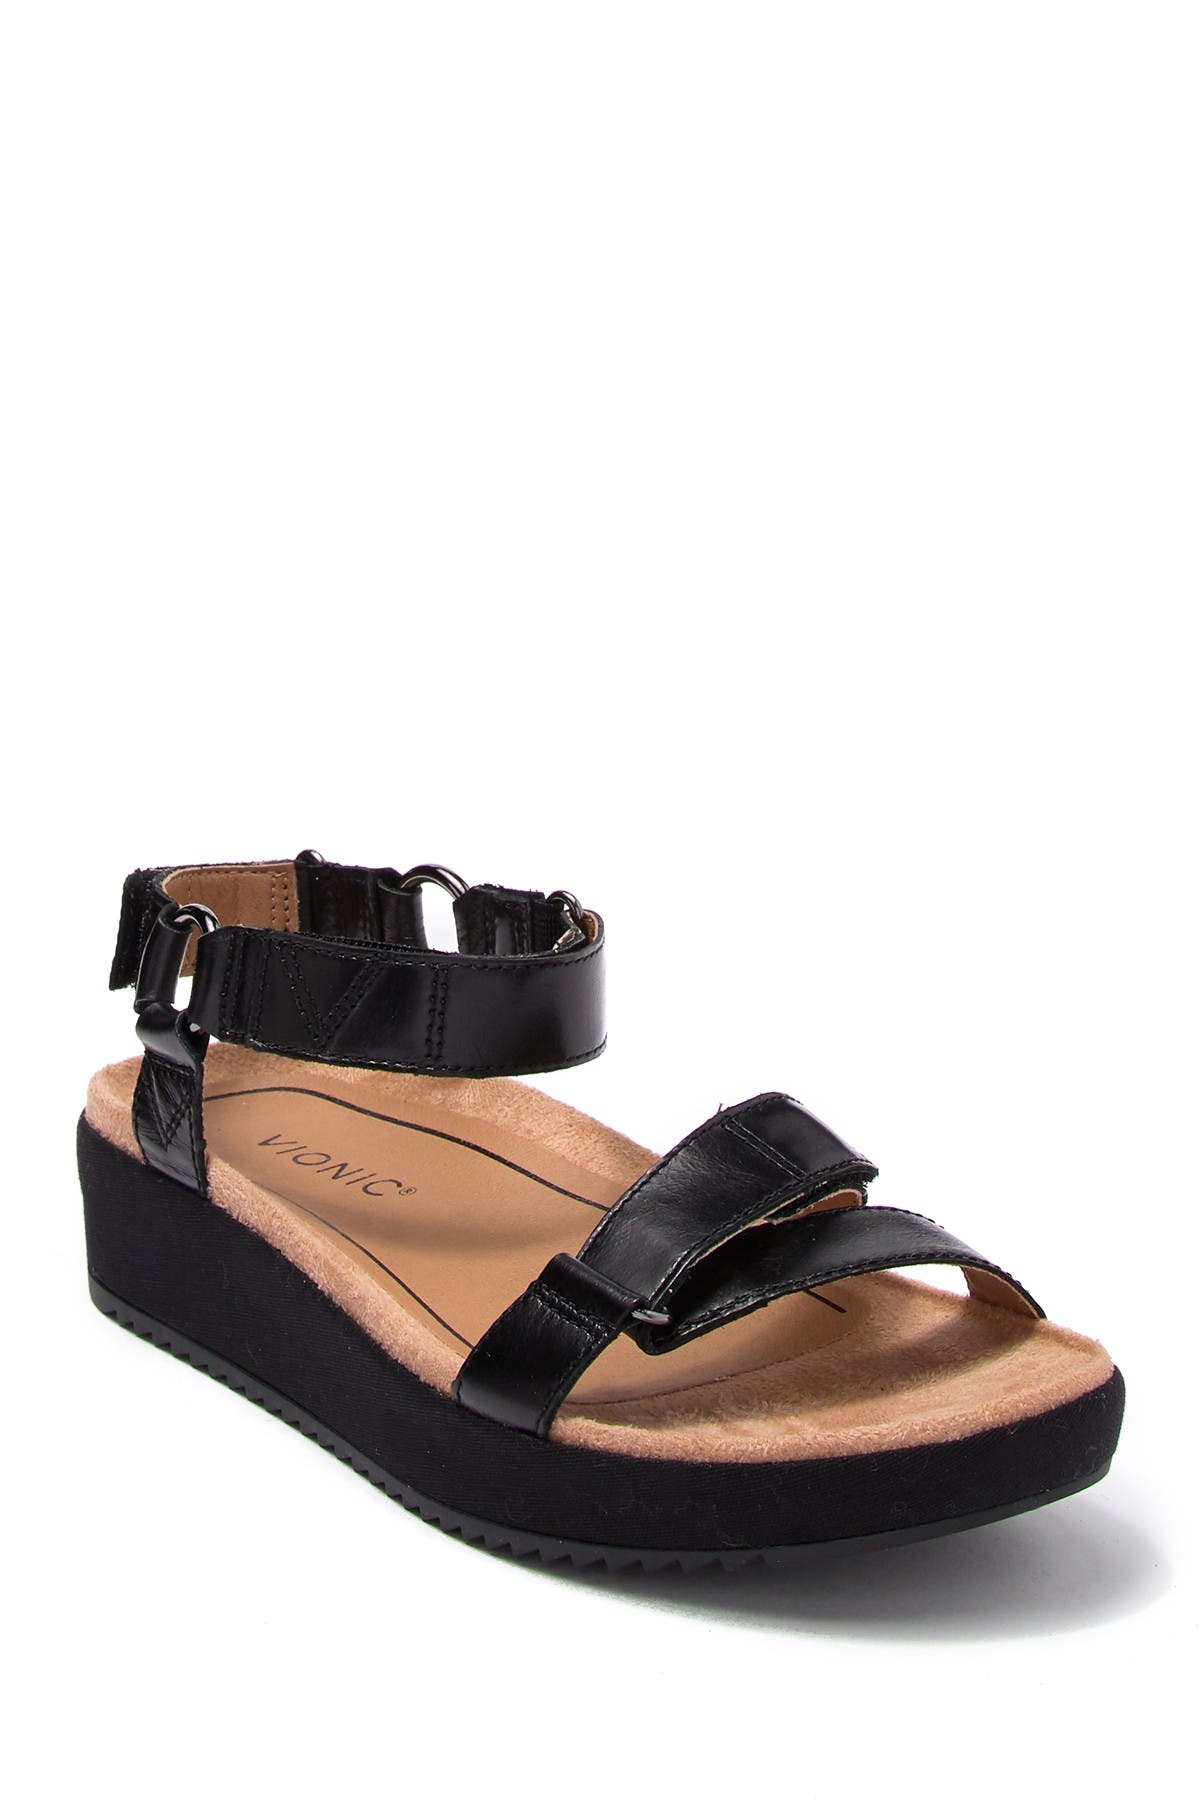 Vionic | Kayan Platform Sandal - Wide 